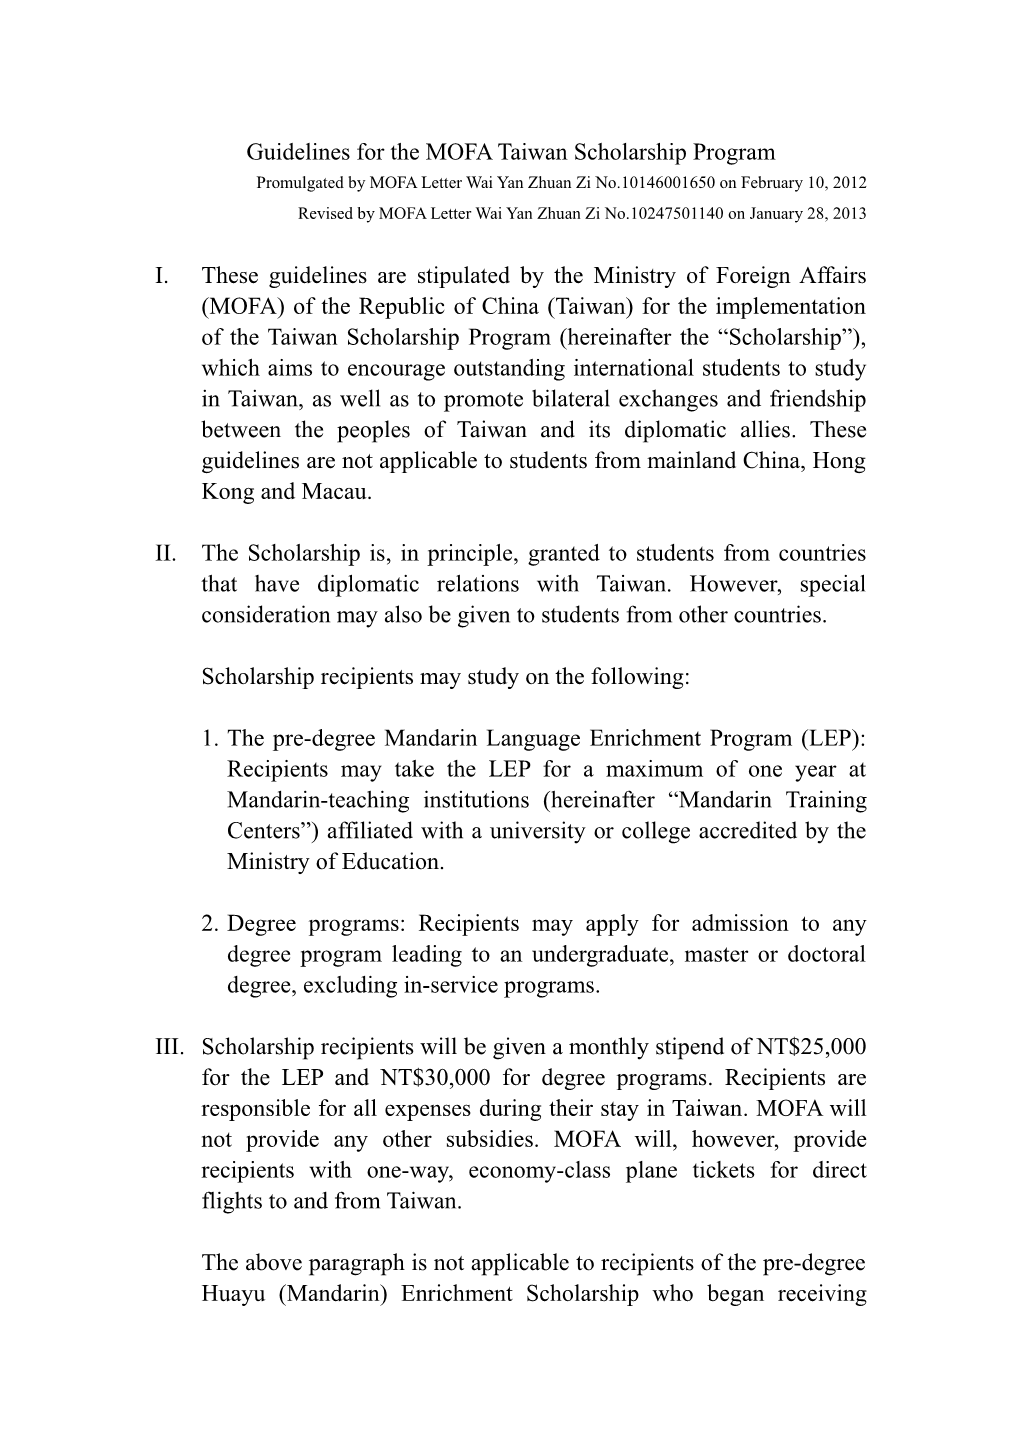 Guideline for MOFA Taiwan Scholarship Program